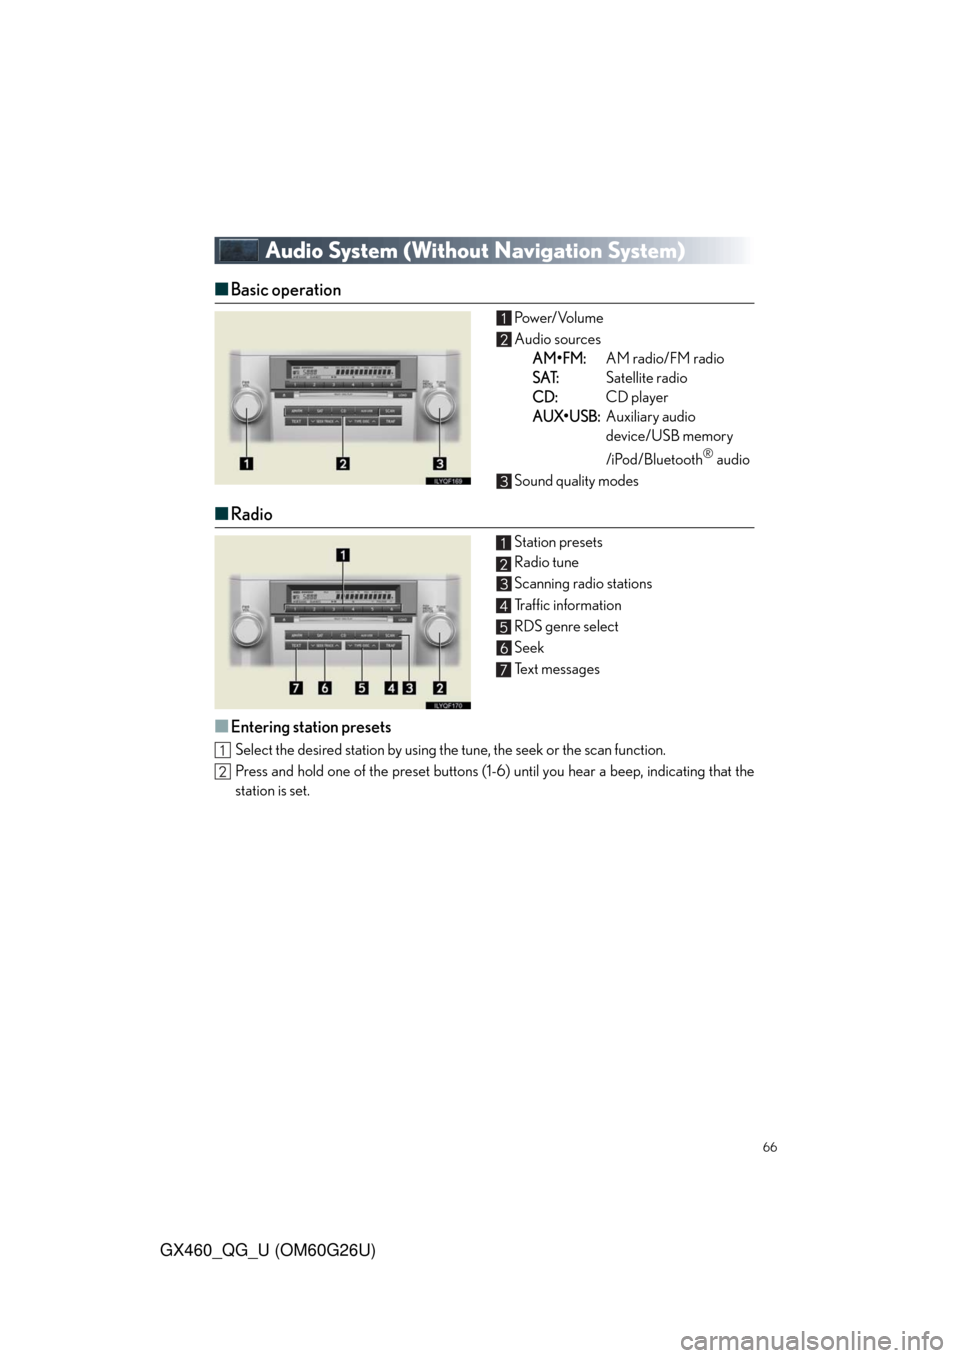 Lexus GX460 2011  Opening, Closing And Locking The Doors / LEXUS 2011 GX460 OWNERS MANUAL QUICK GUIDE (OM60G26U) 66
GX460_QG_U (OM60G26U)
Audio System (Without Navigation System)
■Basic operation Pow e r/ Vo l u m e
Audio sources
AM•FM:AM radio/FM radio
SAT:Satellite radio
CD:CD player
AUX•USB:Auxiliary au